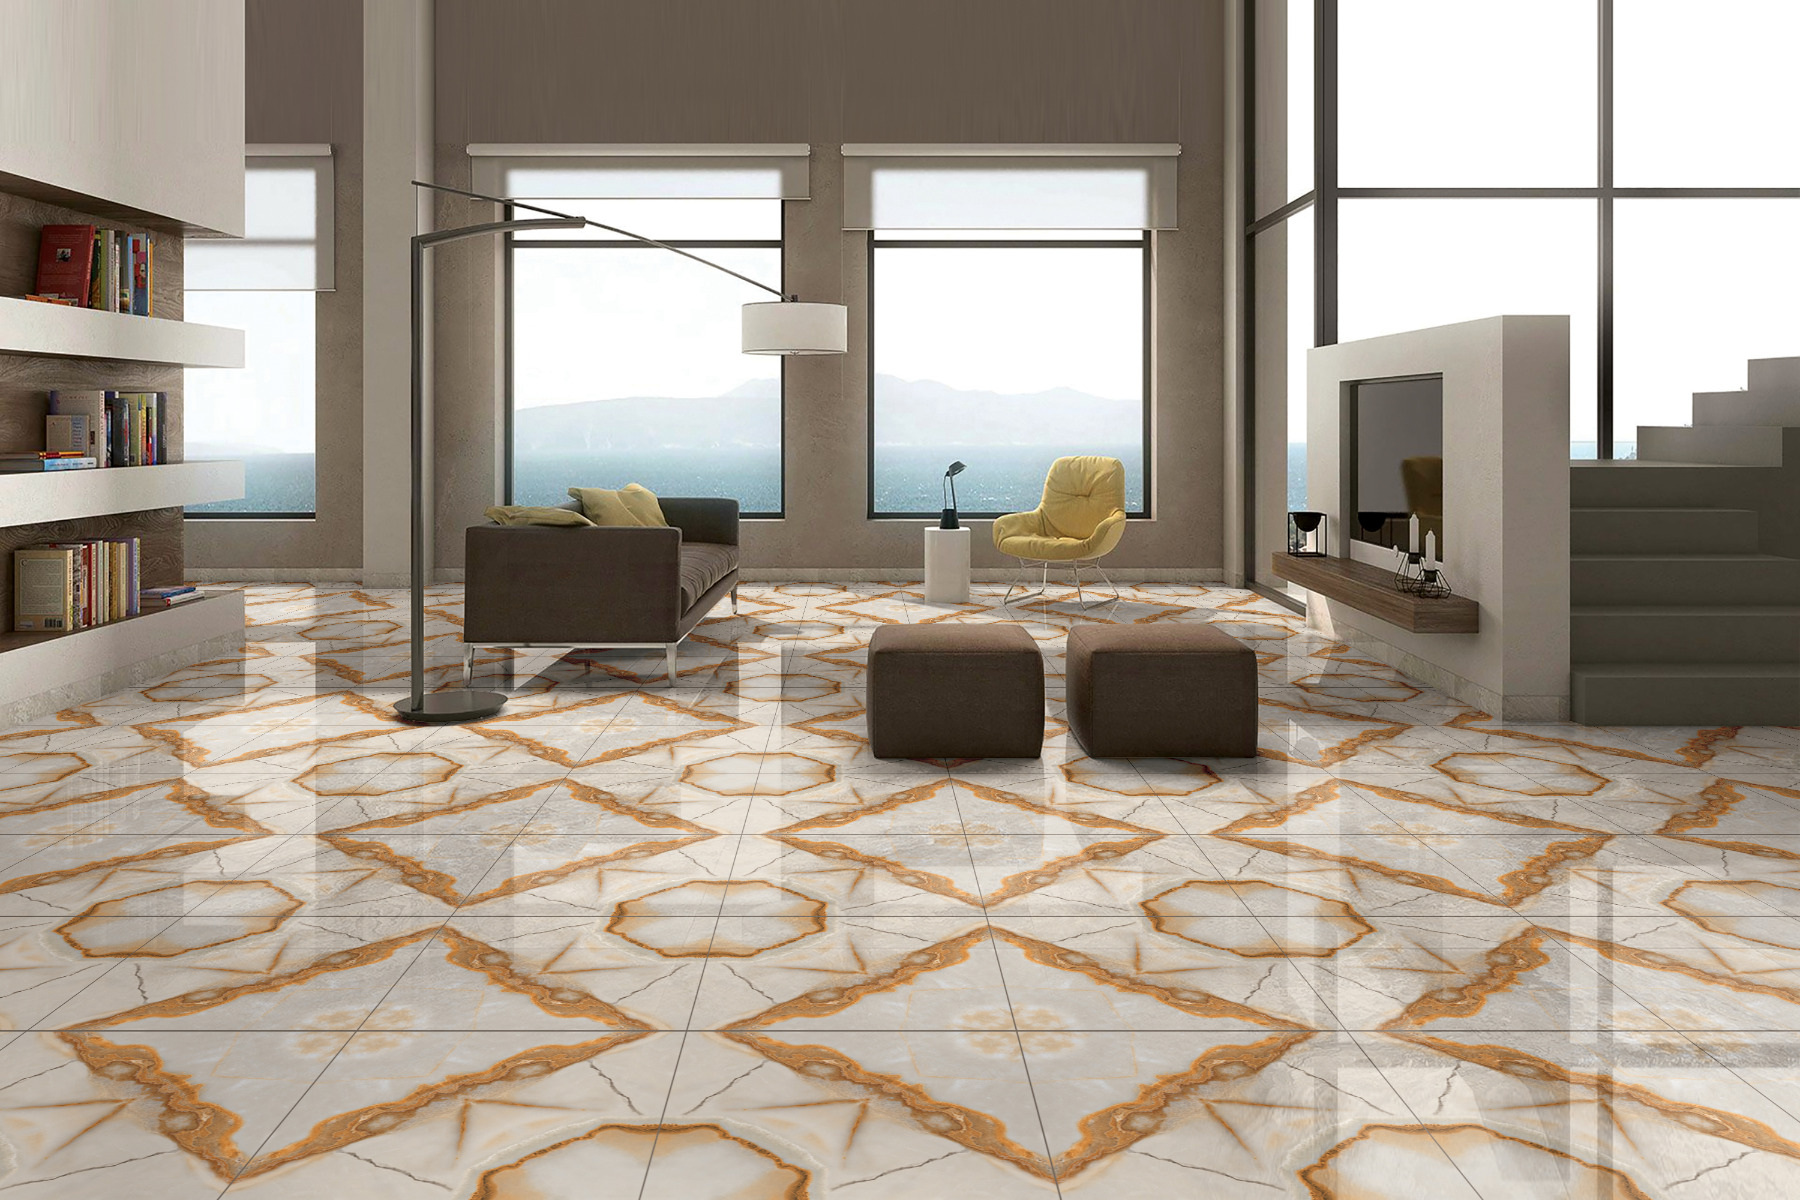 MARBLE TILE | Marble living room floor, Marble flooring design, Tile floor  living room